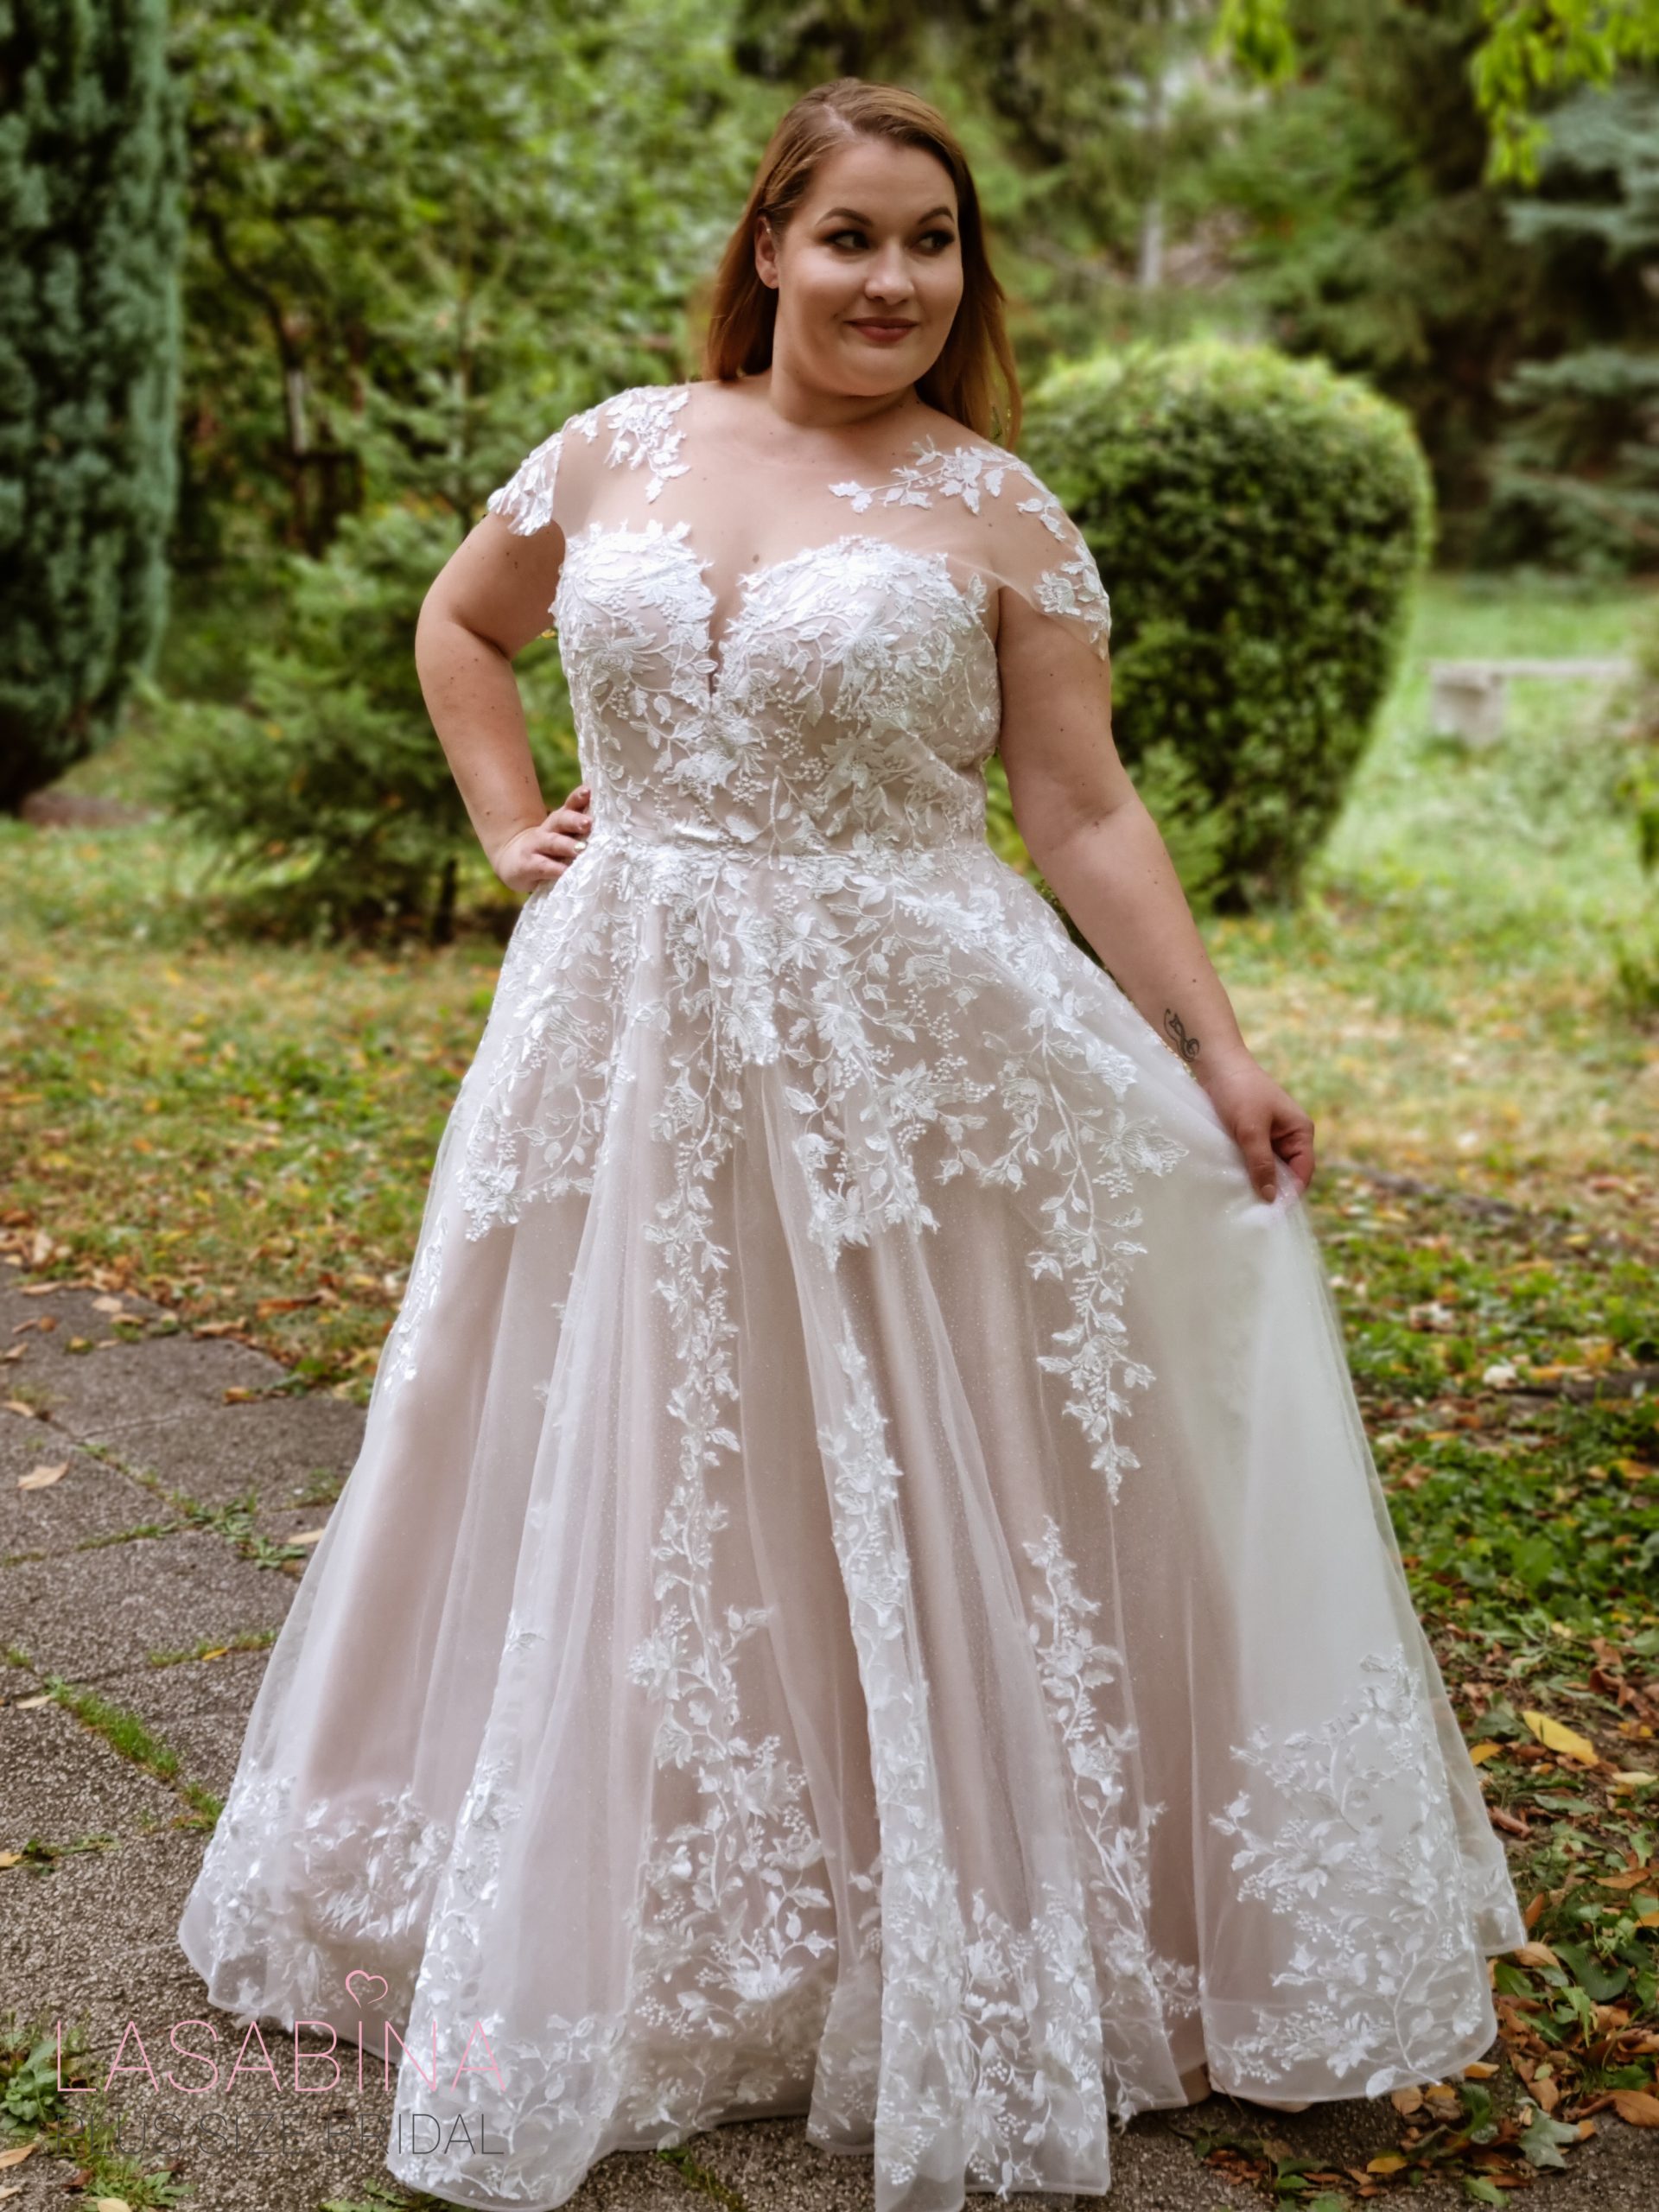 CLAUDIA plus size wedding dress - LASABINA Plus Size Bridal